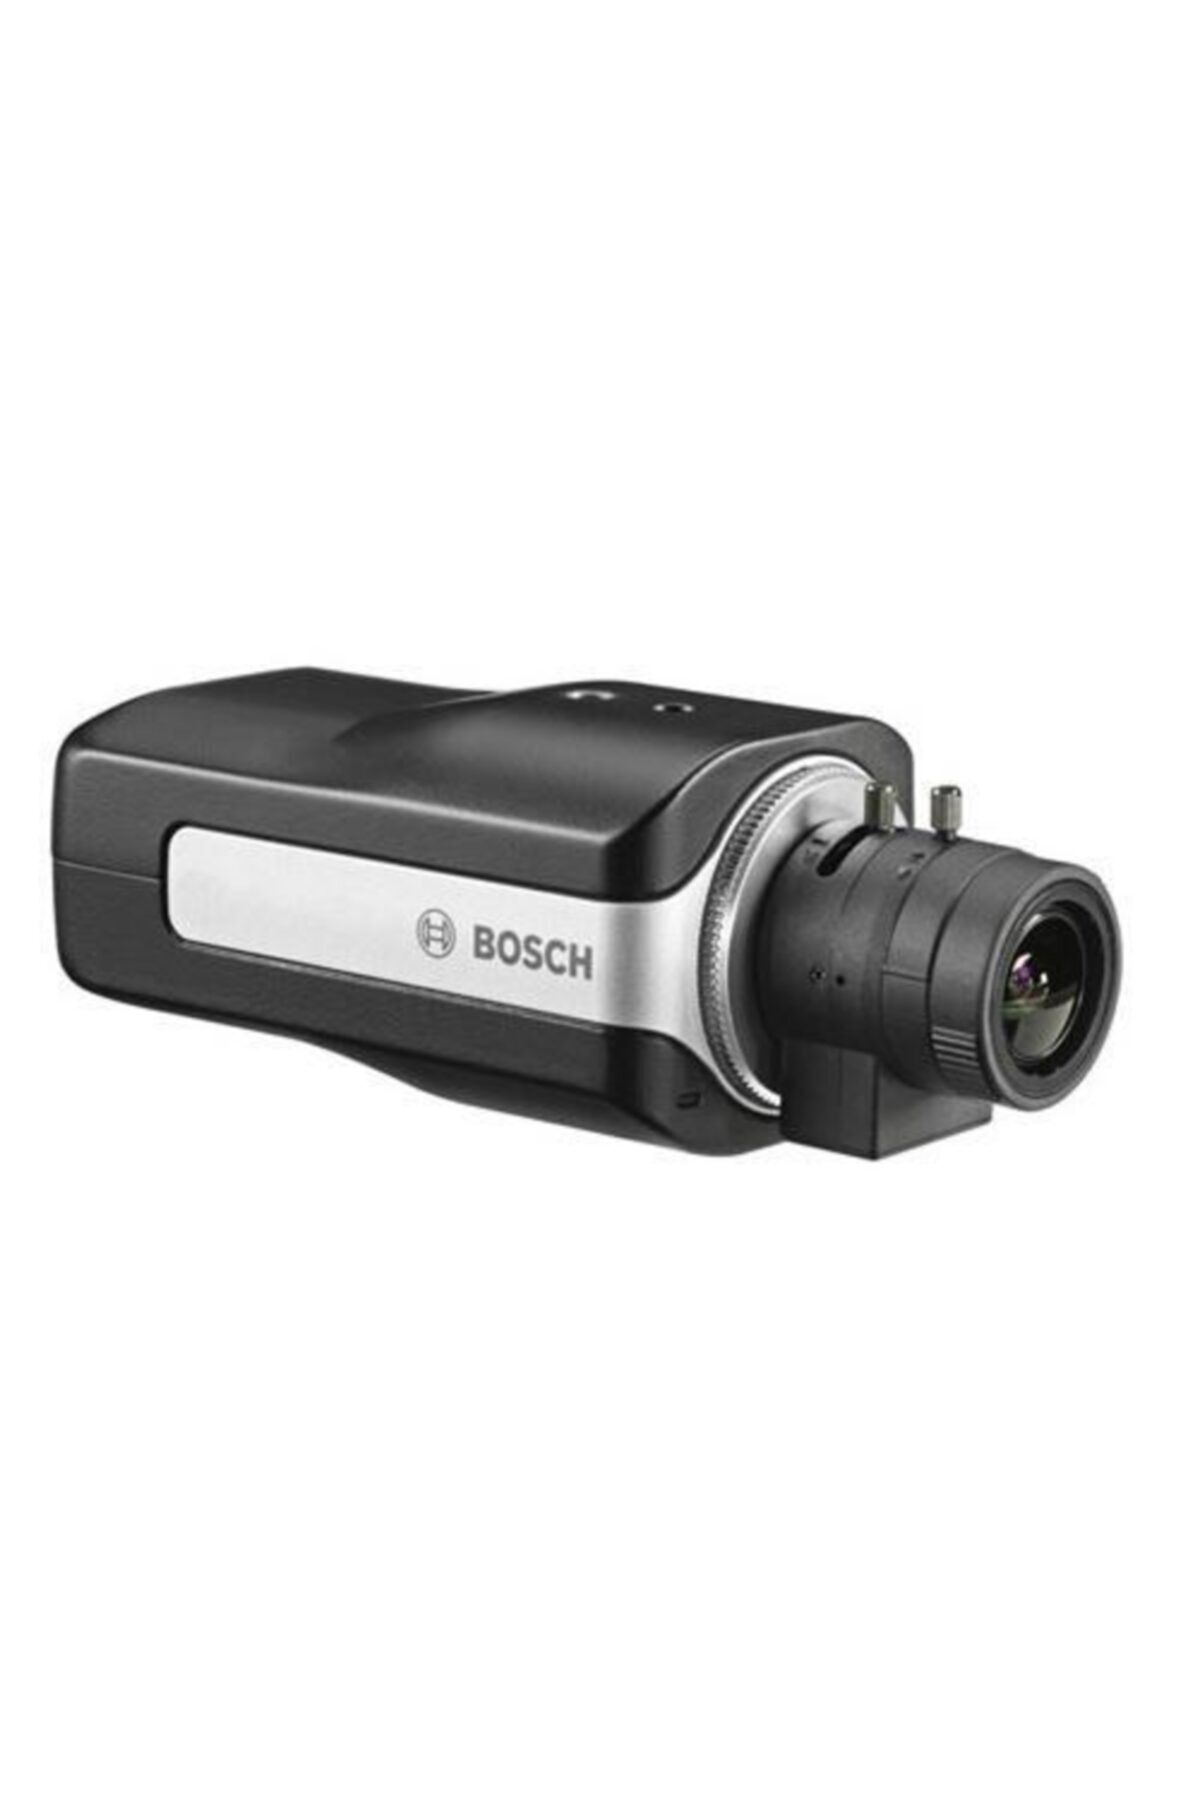 Bosch Dınıon Ip 4000 Hd Kapalı Sabit Kutu Kamera 1mp 3.3-12mm